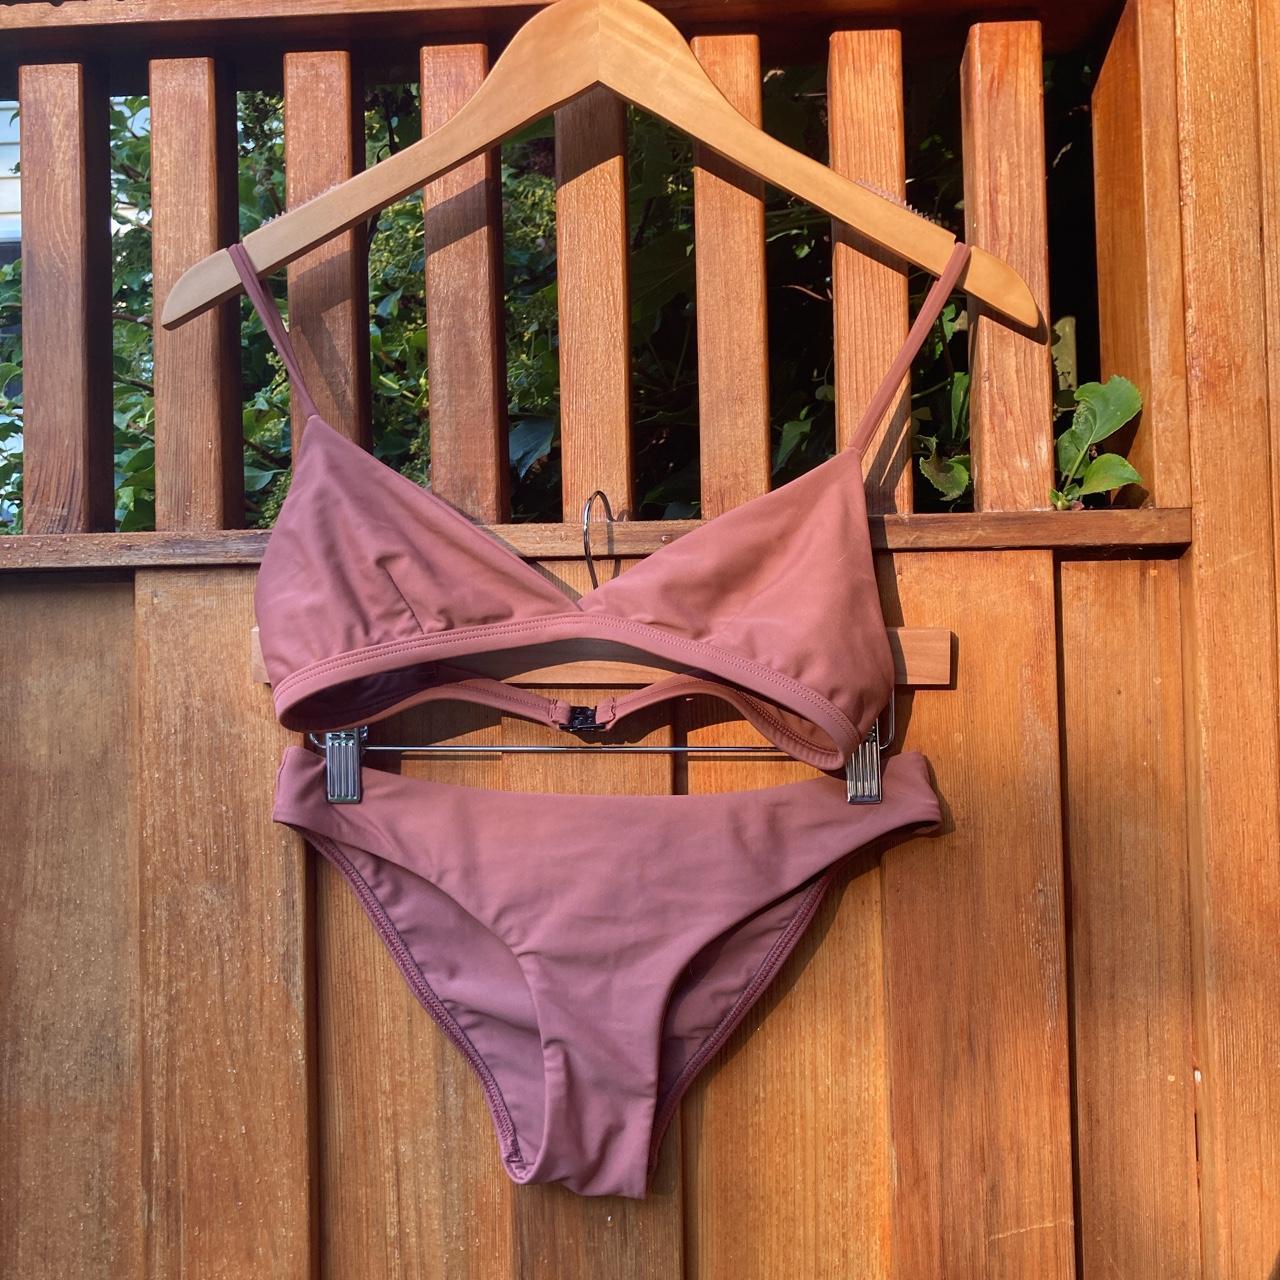 Product Image 1 - Repop Matteau bikini. Aus size